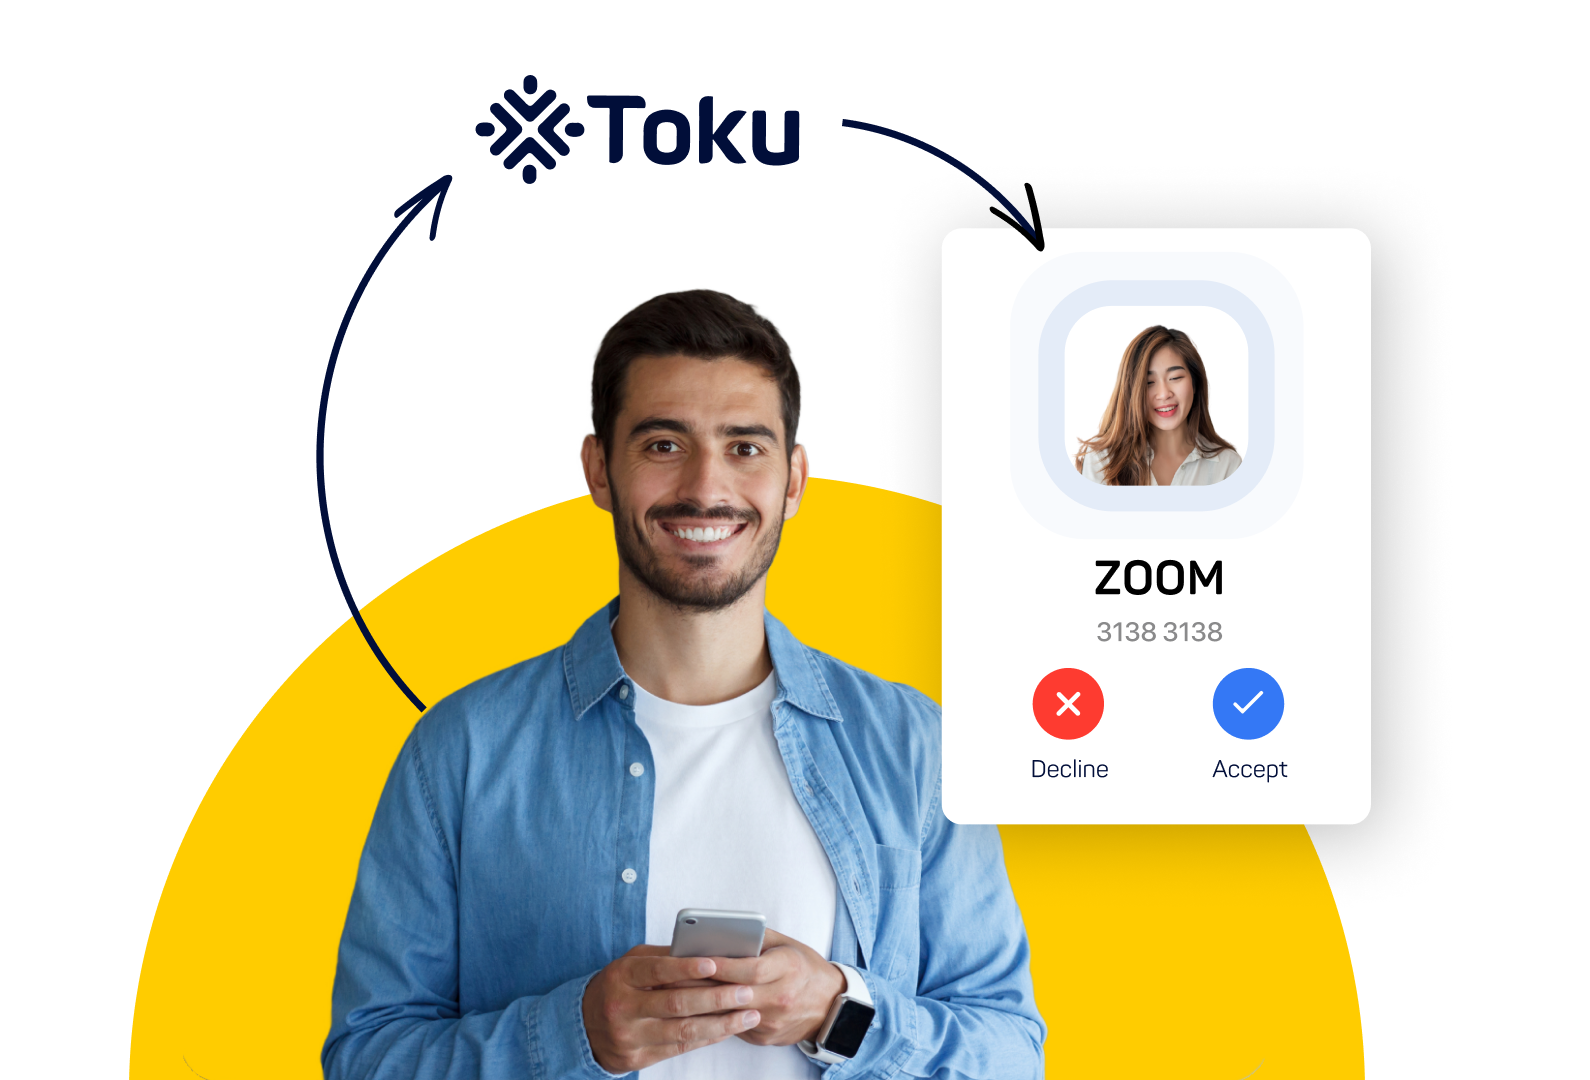 Toku for Zoom Phone